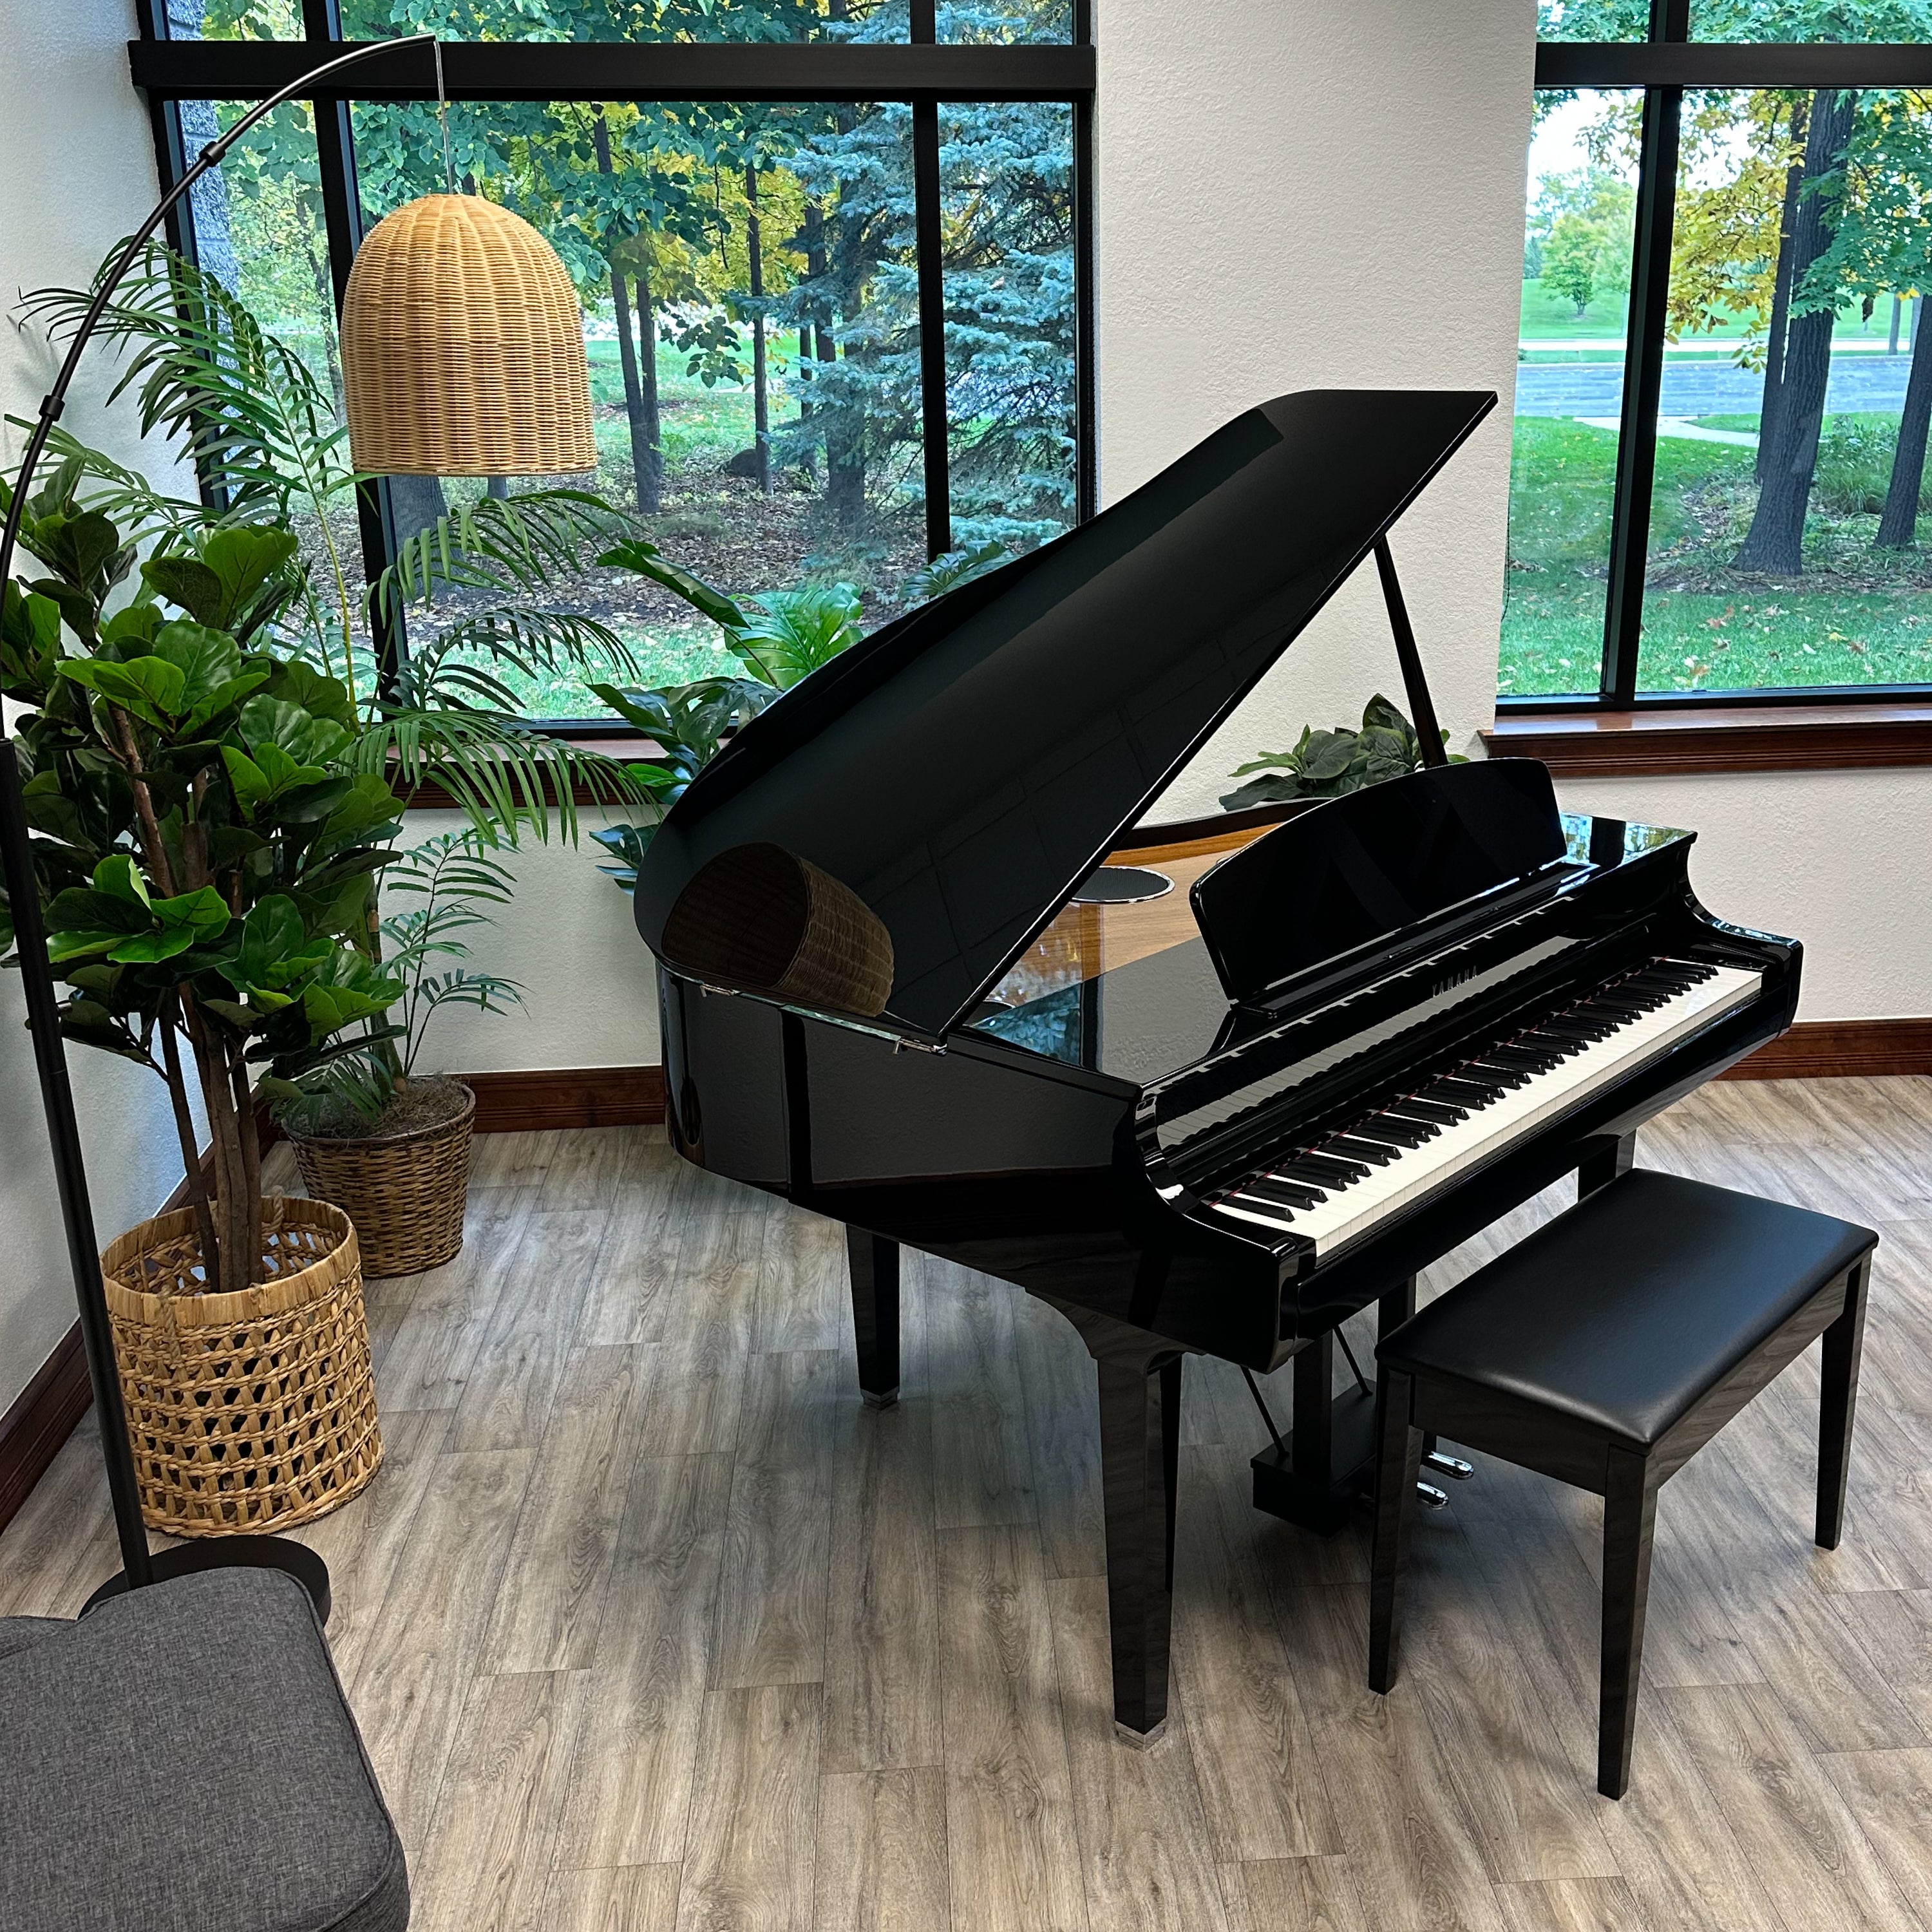 Yamaha Clavinova CLP-795GP Digital Piano - Polished Ebony - in a stylish living room